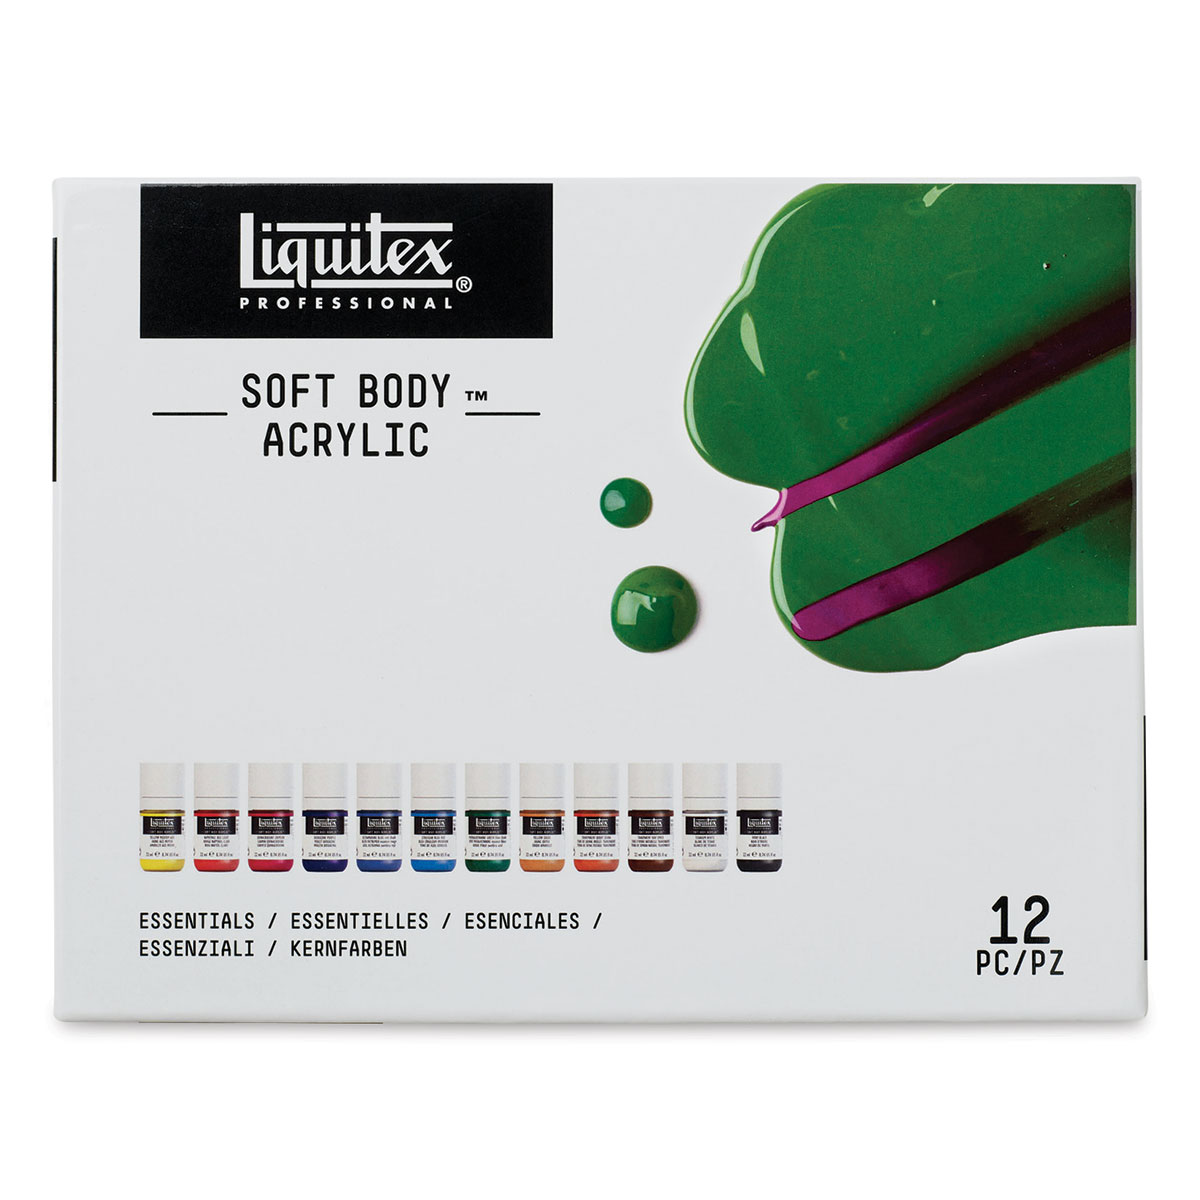 Lot 5 NEW Liquitex Professional Acrylic Artist Color Soft Body Paint 8 oz  Each